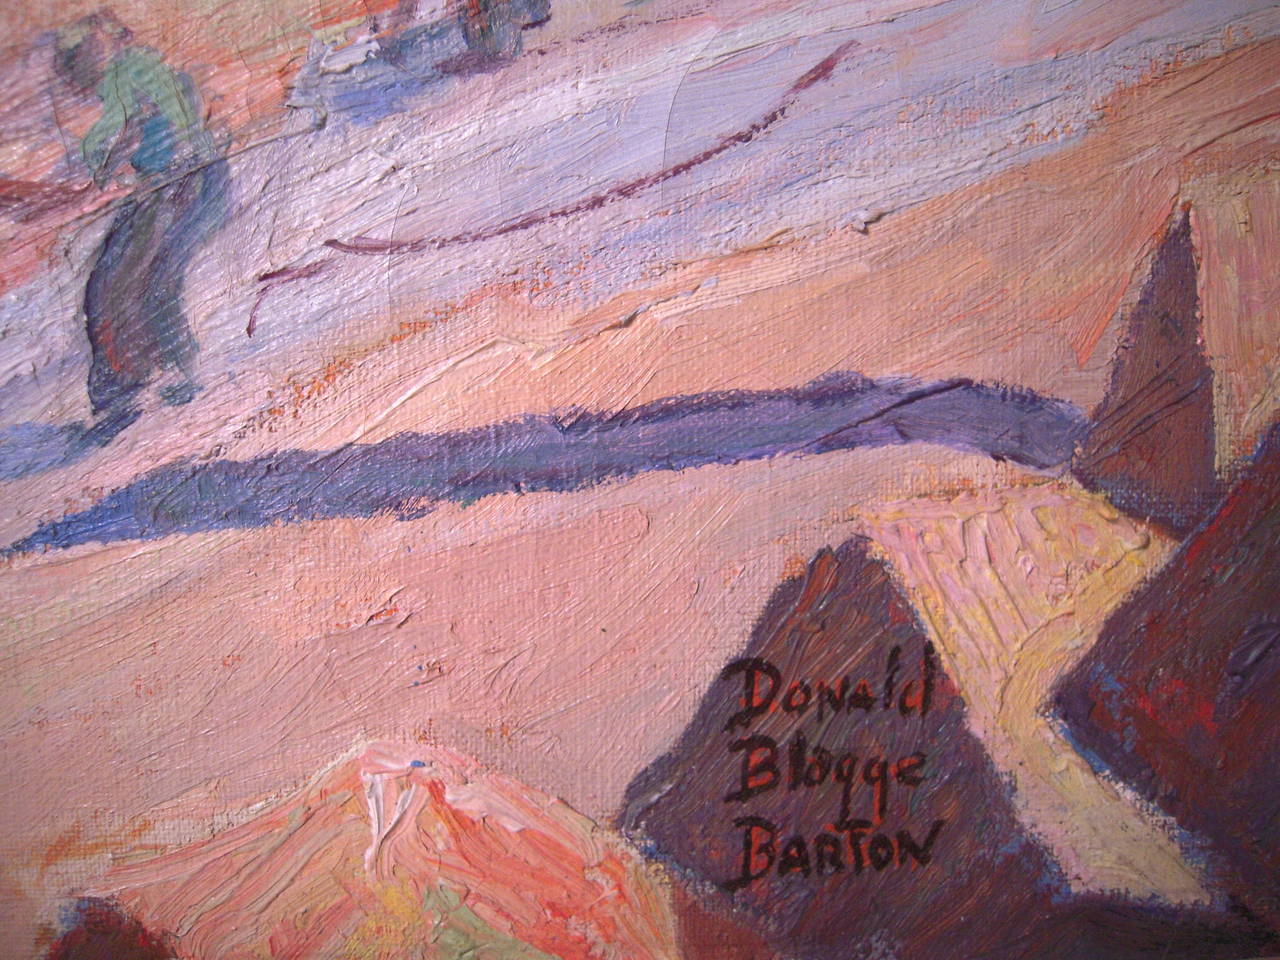 American Donald Blagge Barton Granite Quarry Painting, circa 1930s